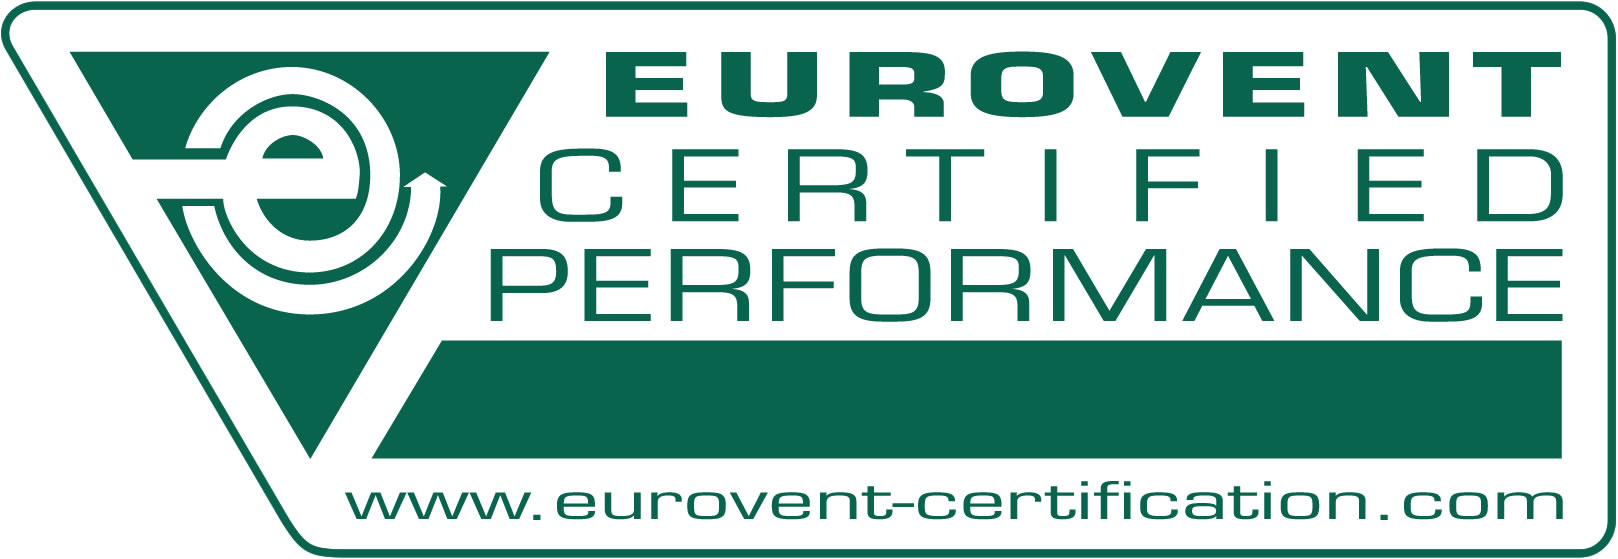 Eurovent Certification logo